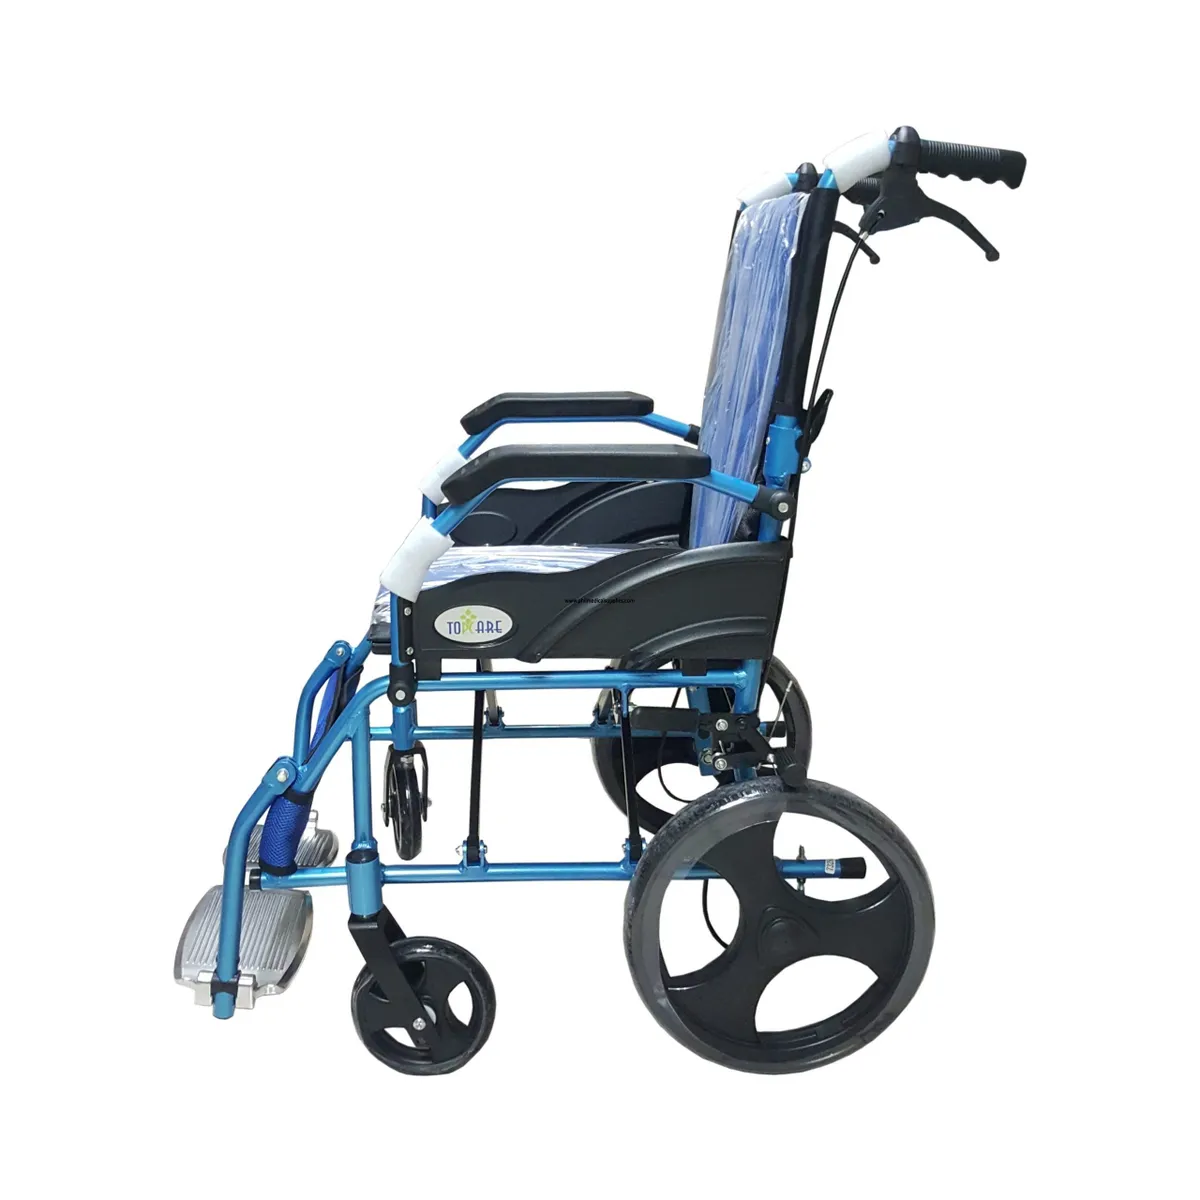 Best wheelchair for travel